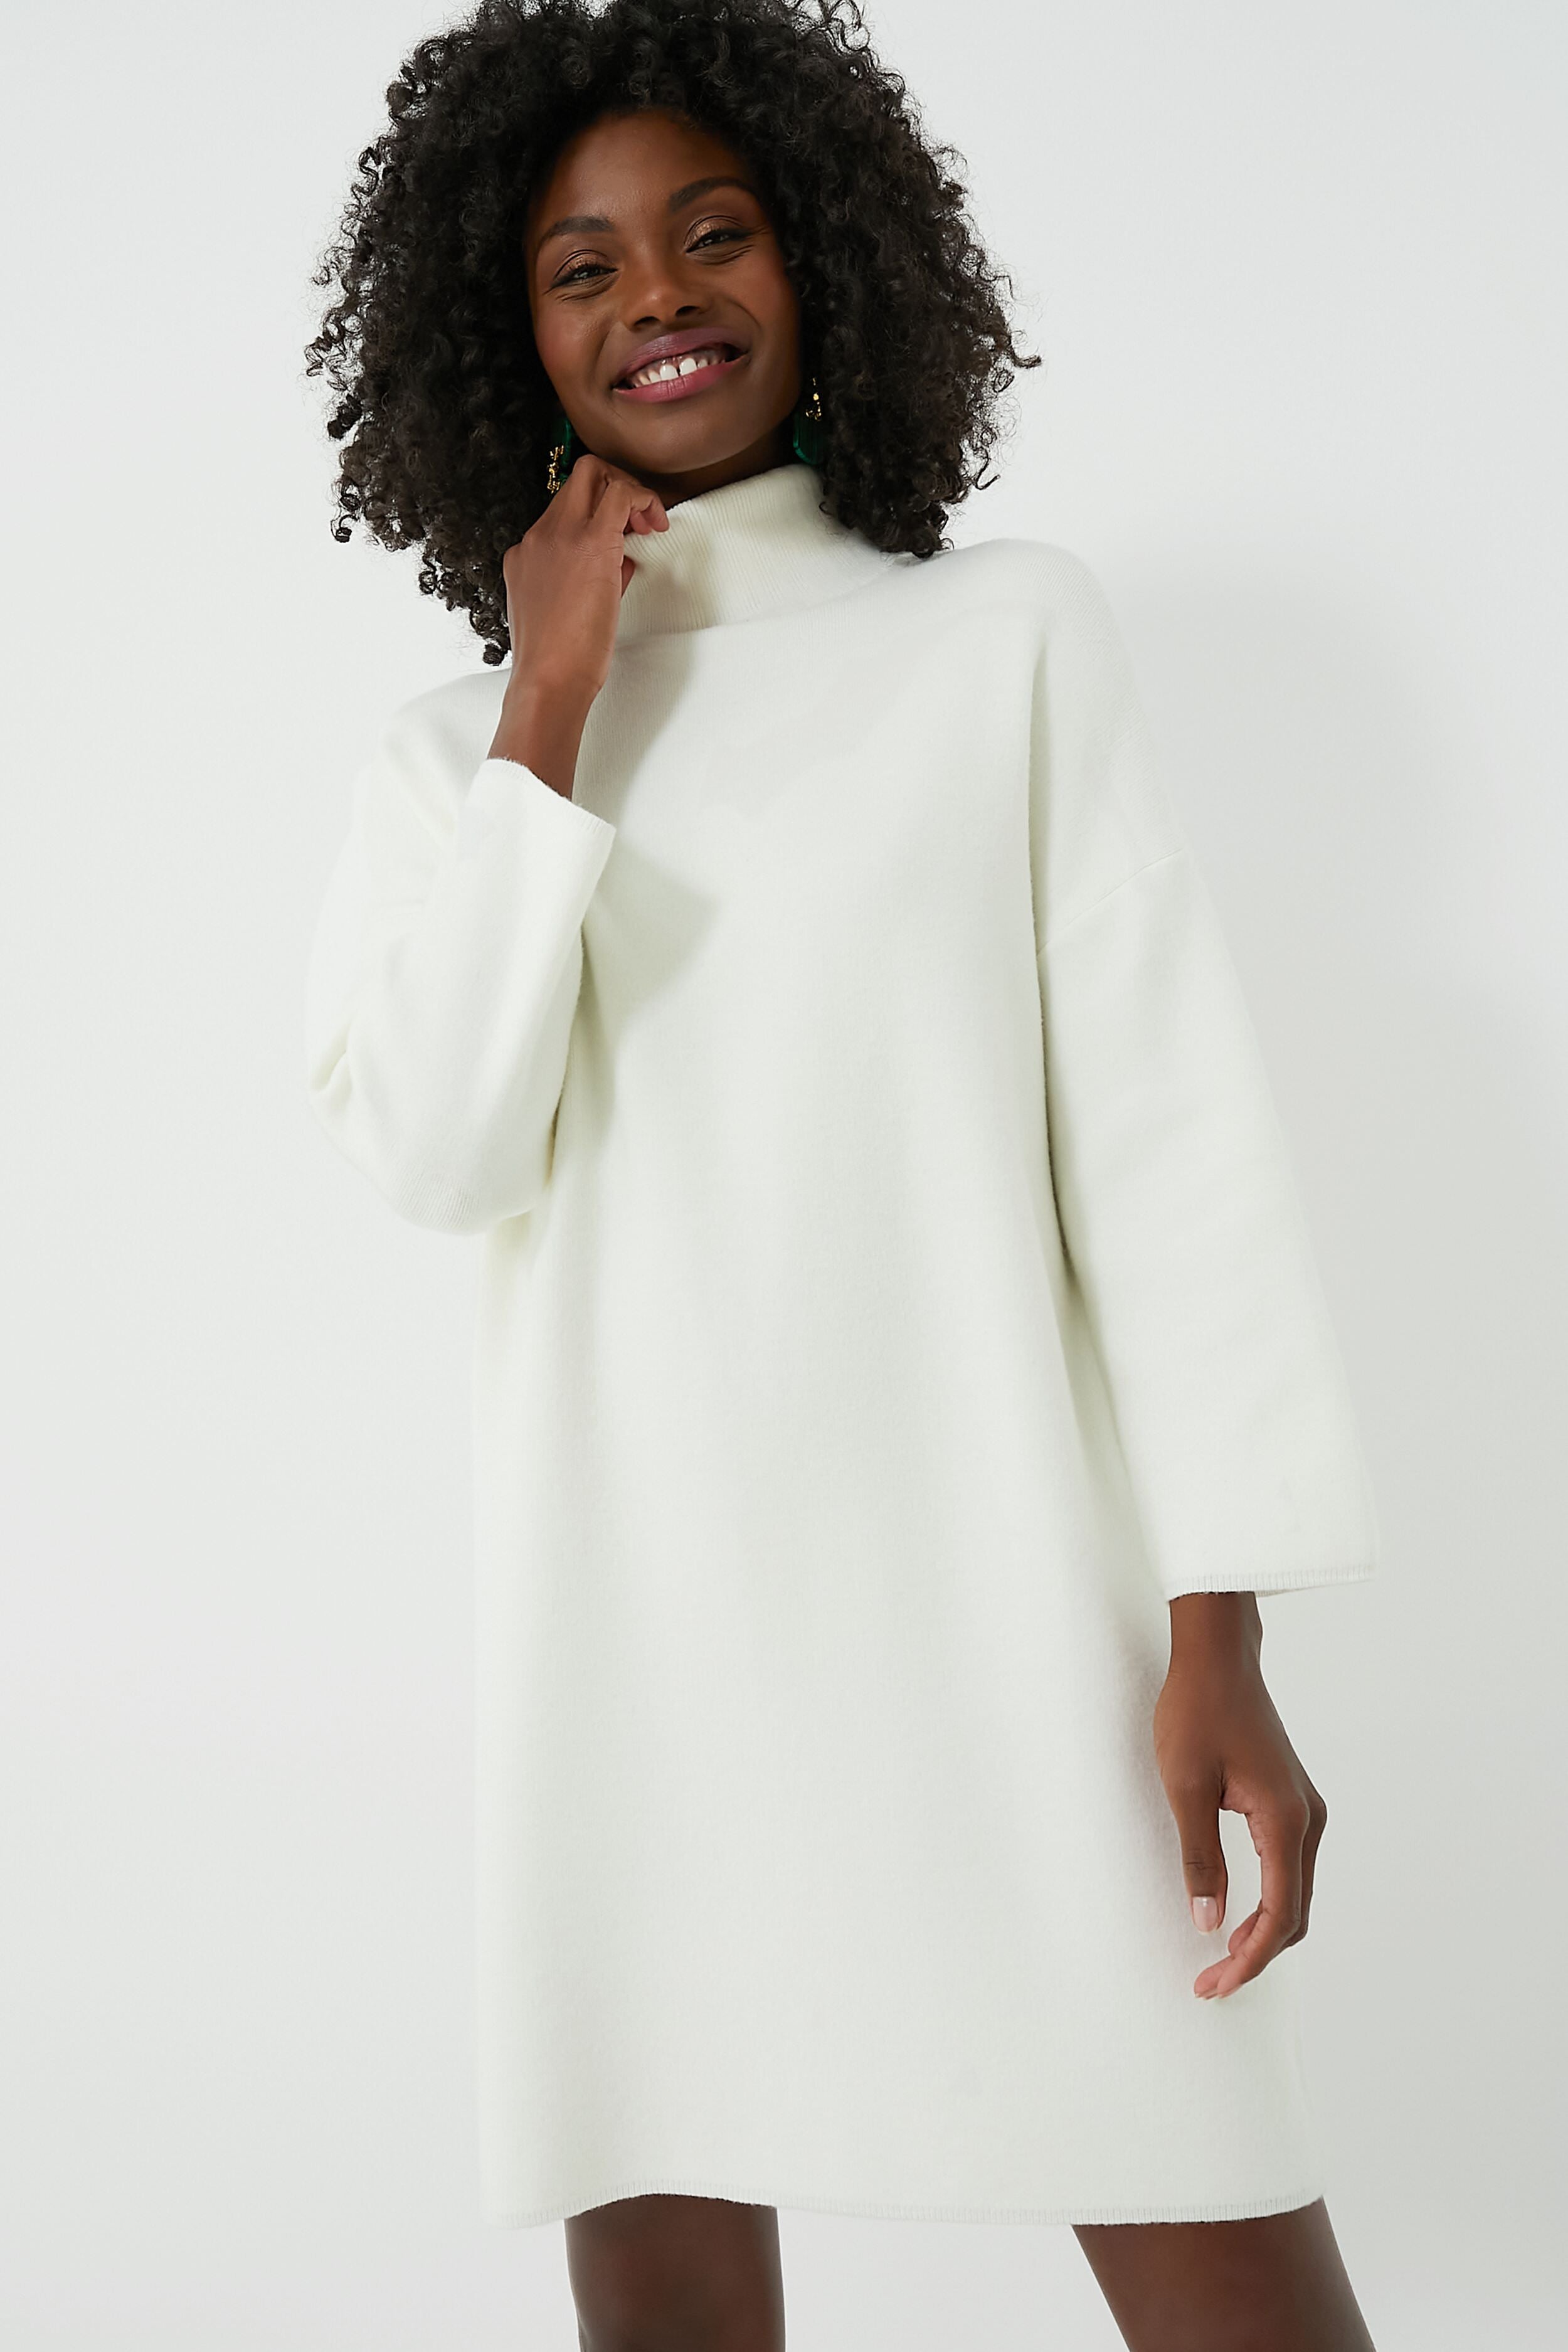 winter white dress